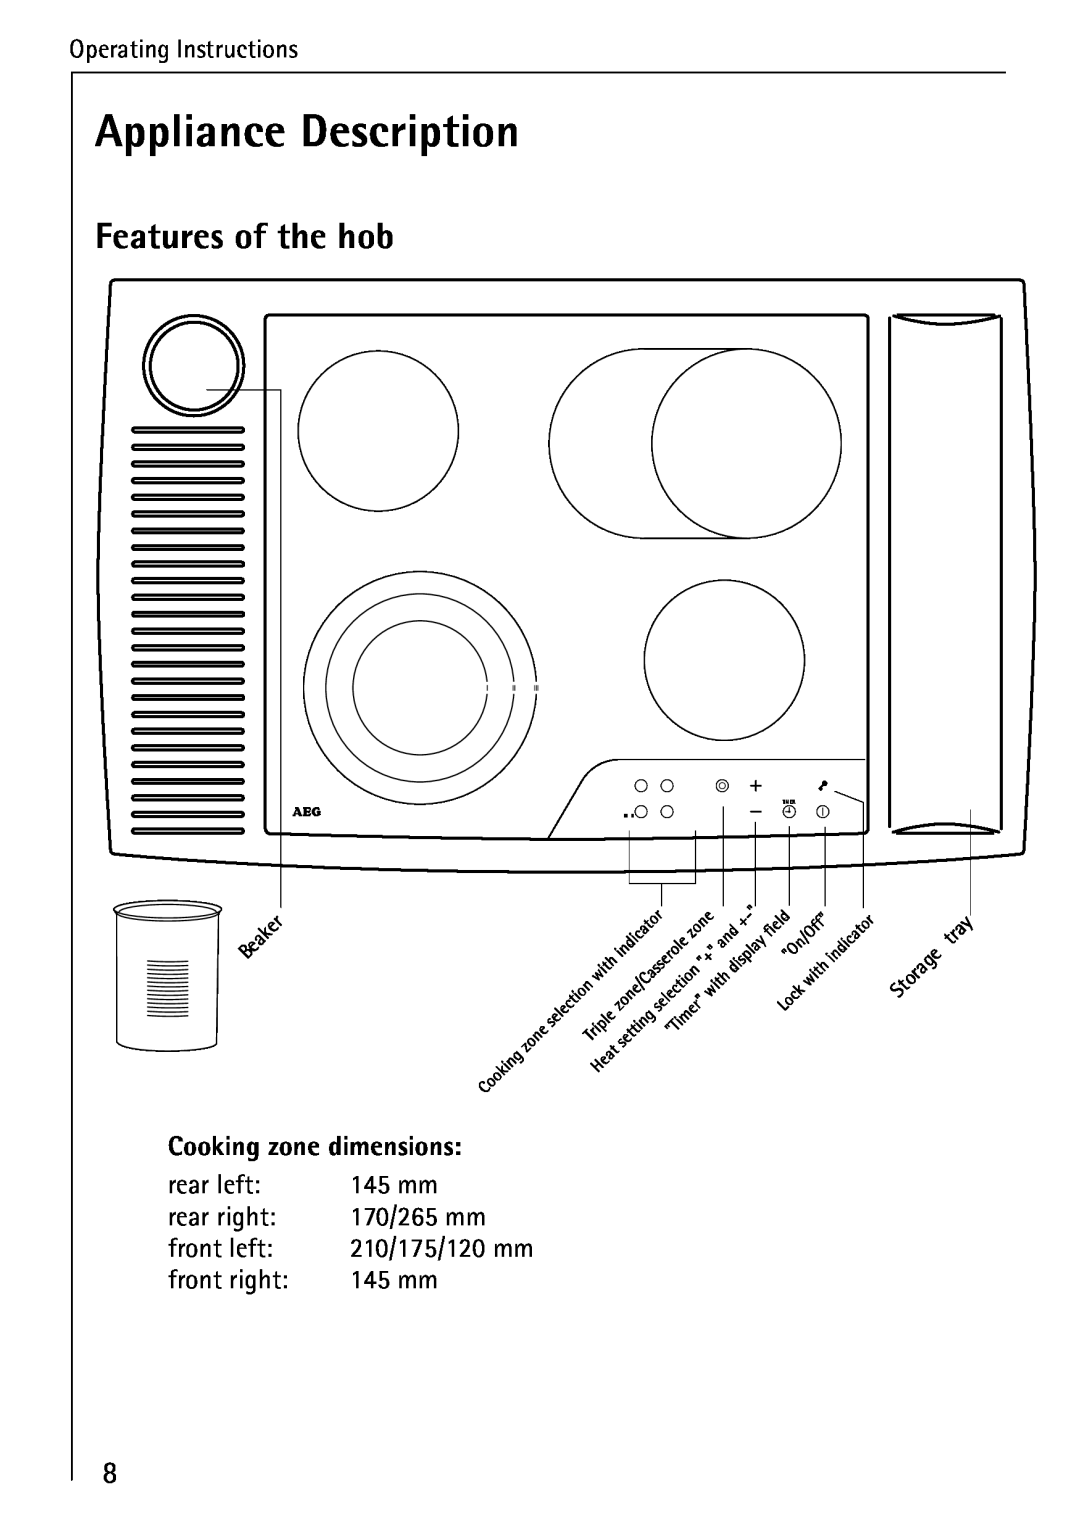 AEG 95300KA-MN operating instructions Appliance Description, Features of the hob, Operating Instructions 